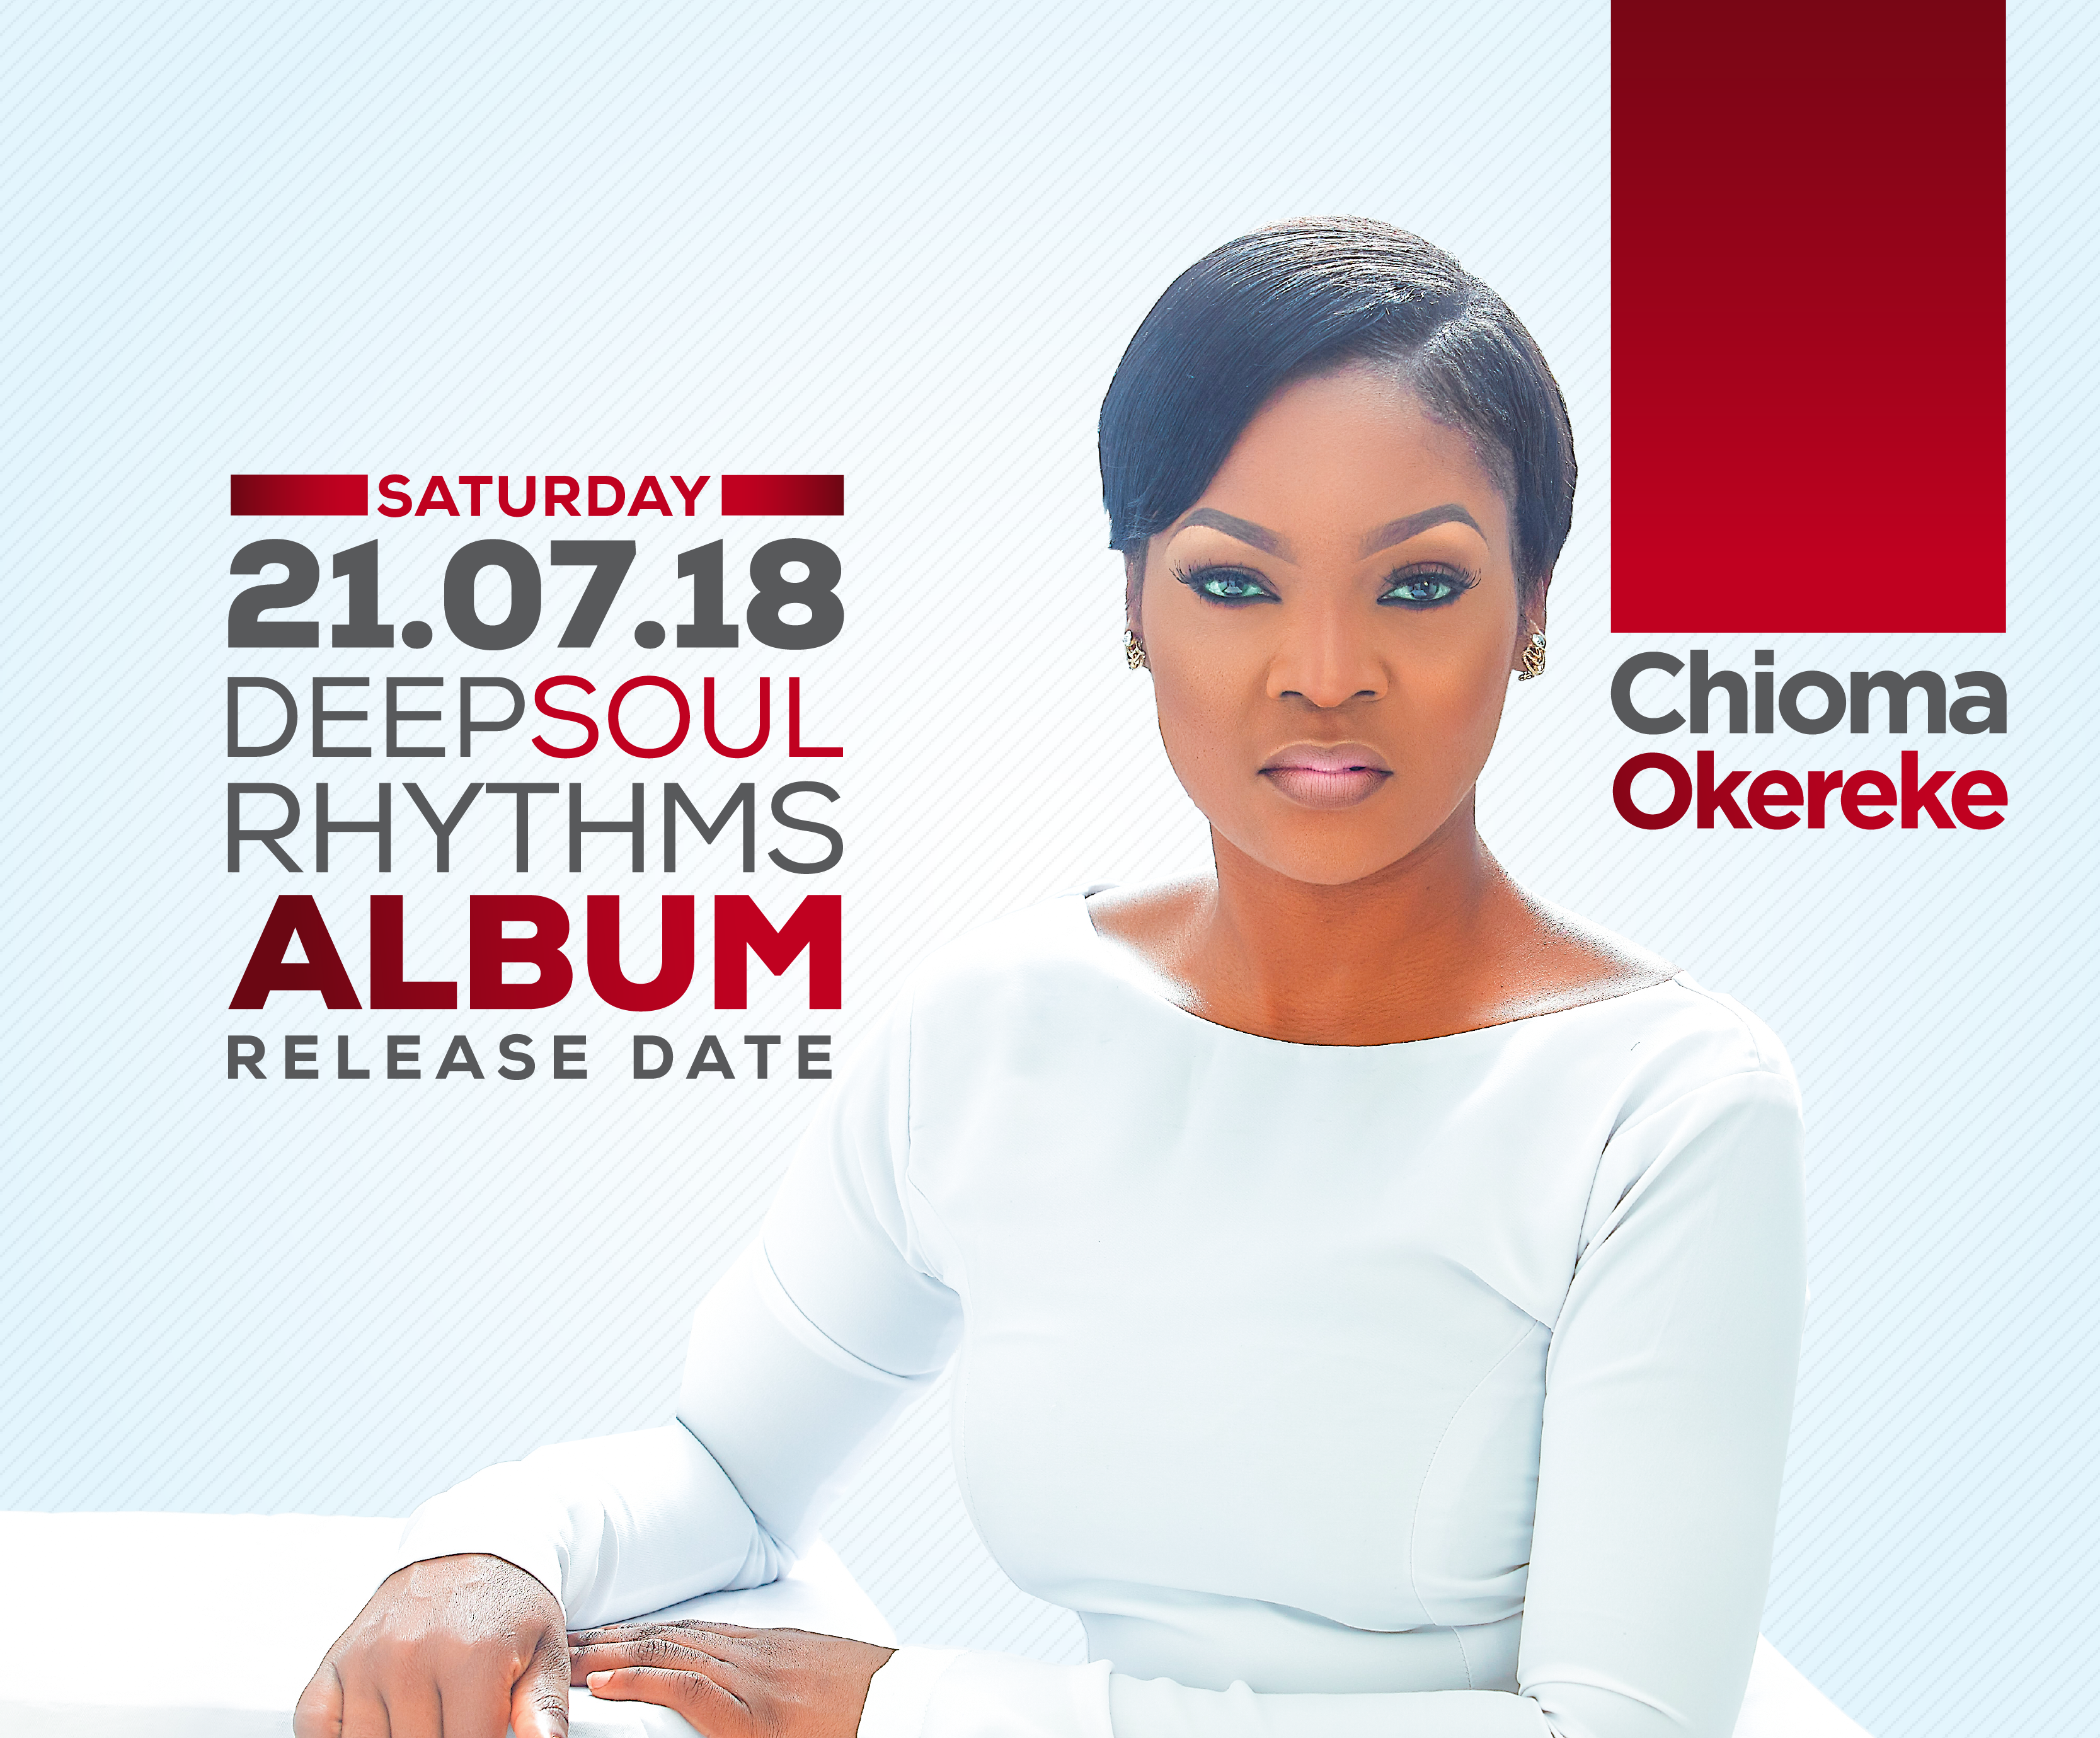 Chioma Okereke news